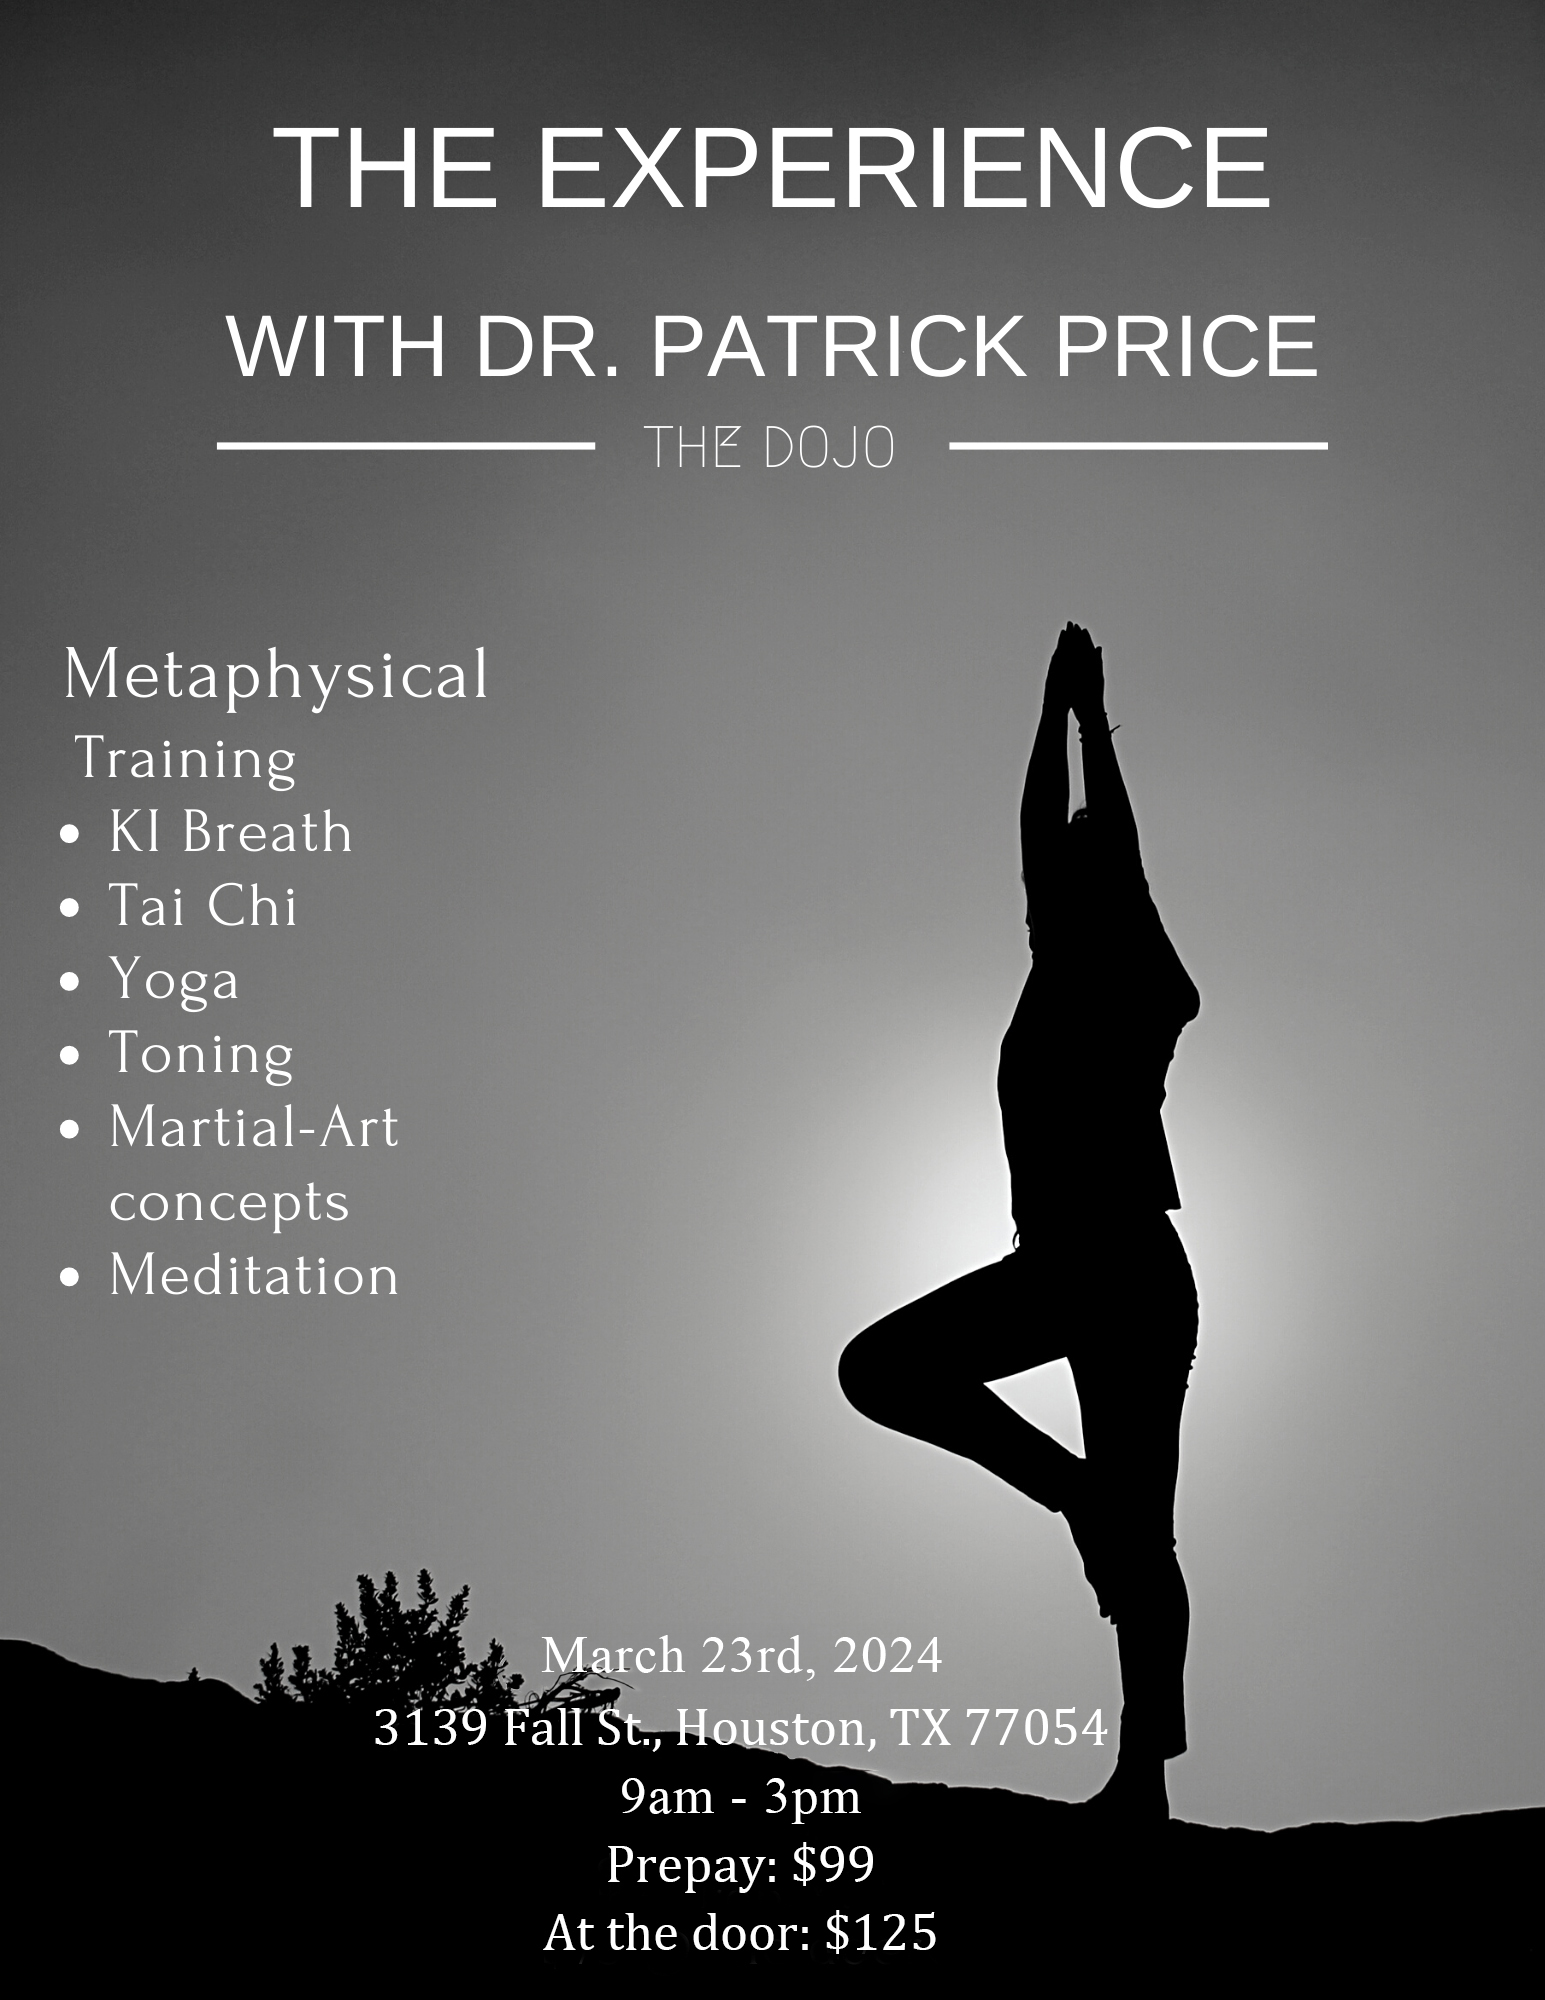 THE EXPERIENCE - DR. PATRICK PRICE - Houston International Wellness Center